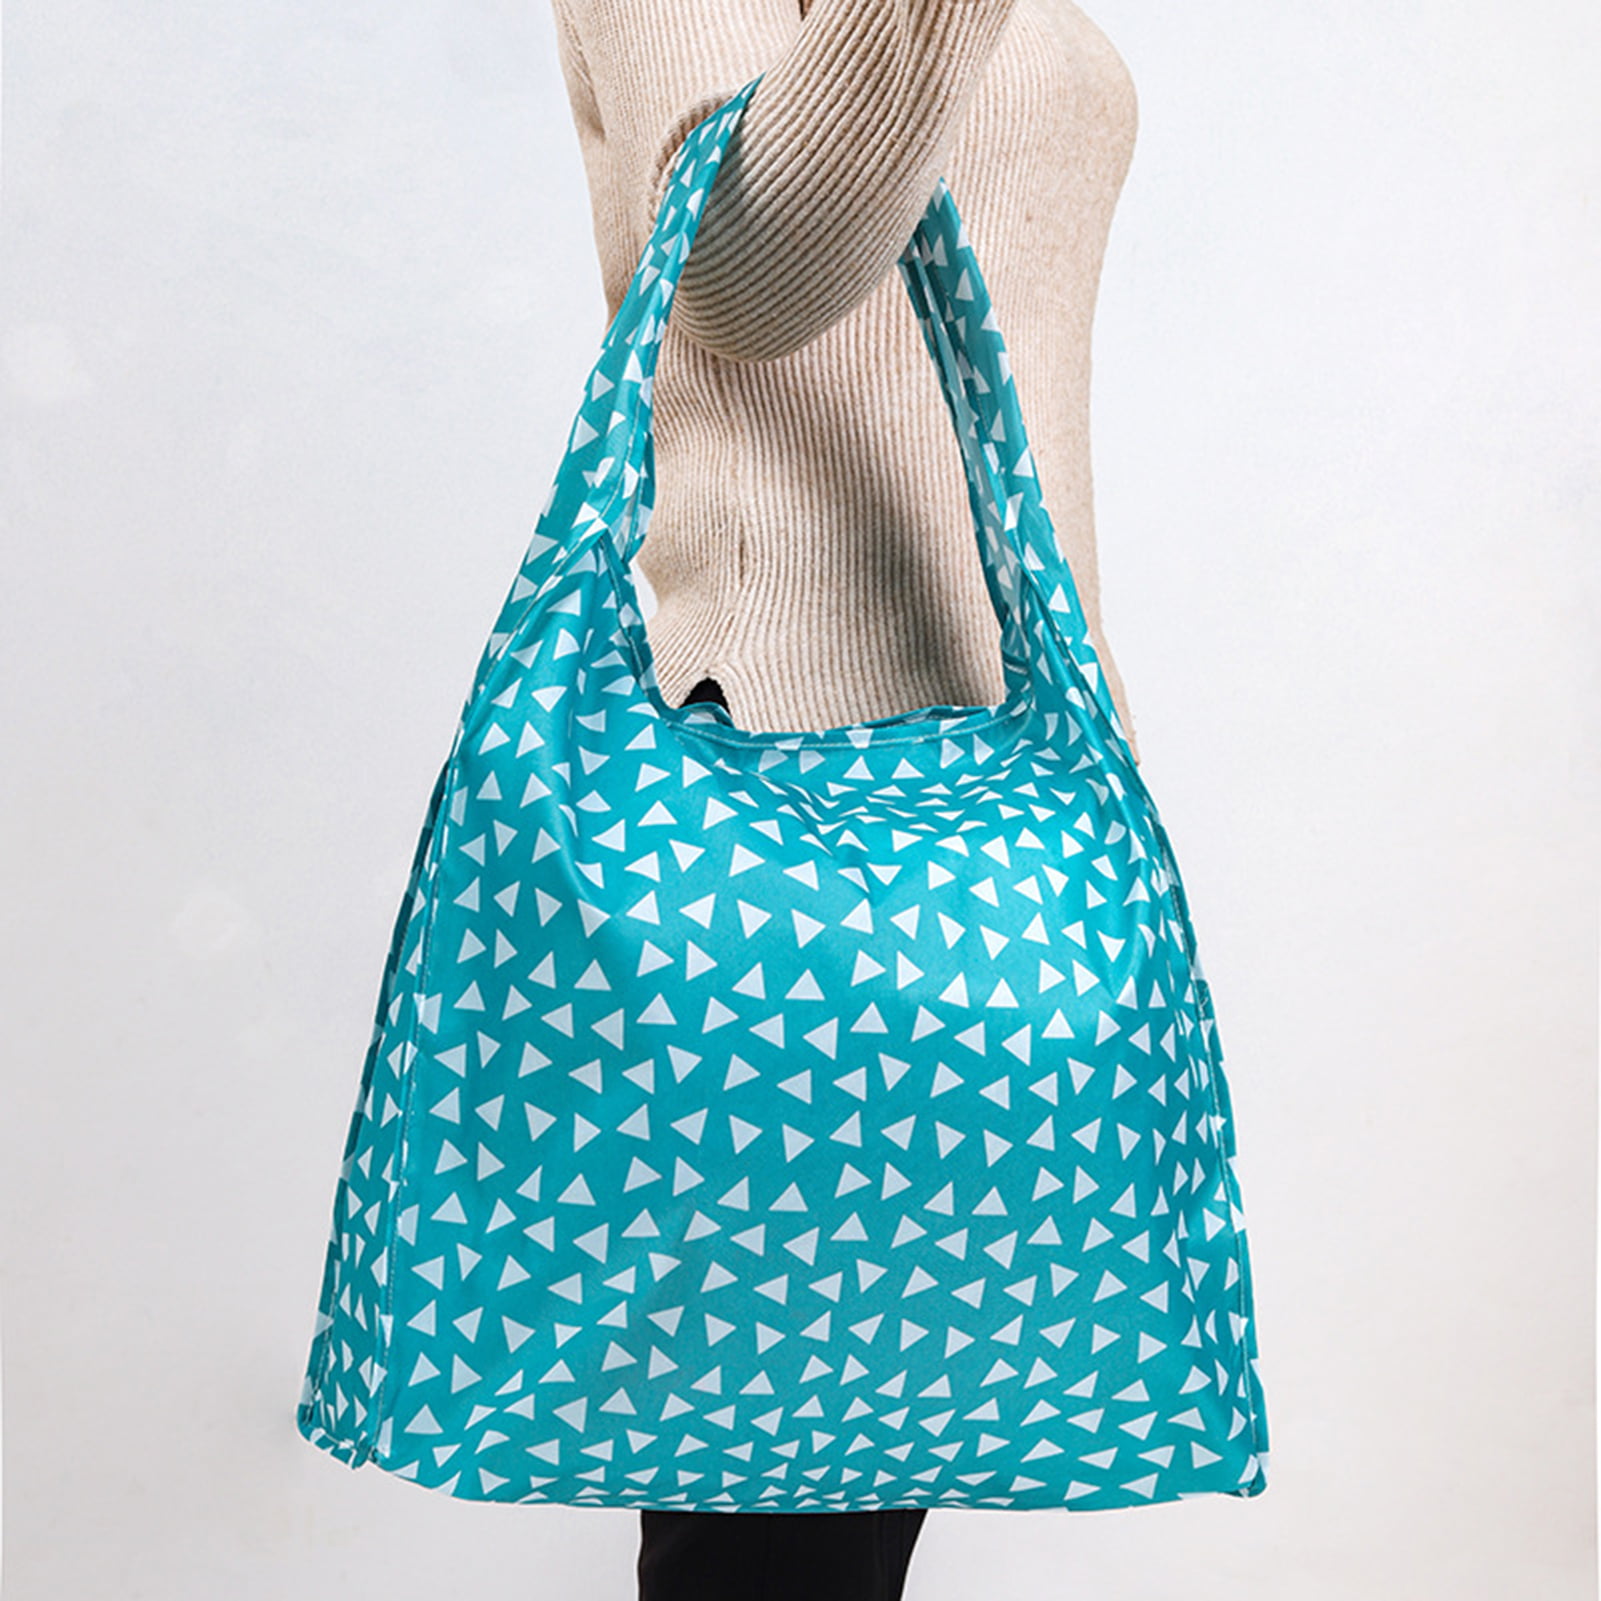 Creative Folding Reusable Shopping Bag Oxford Cloth Bags With Tote Handbag 